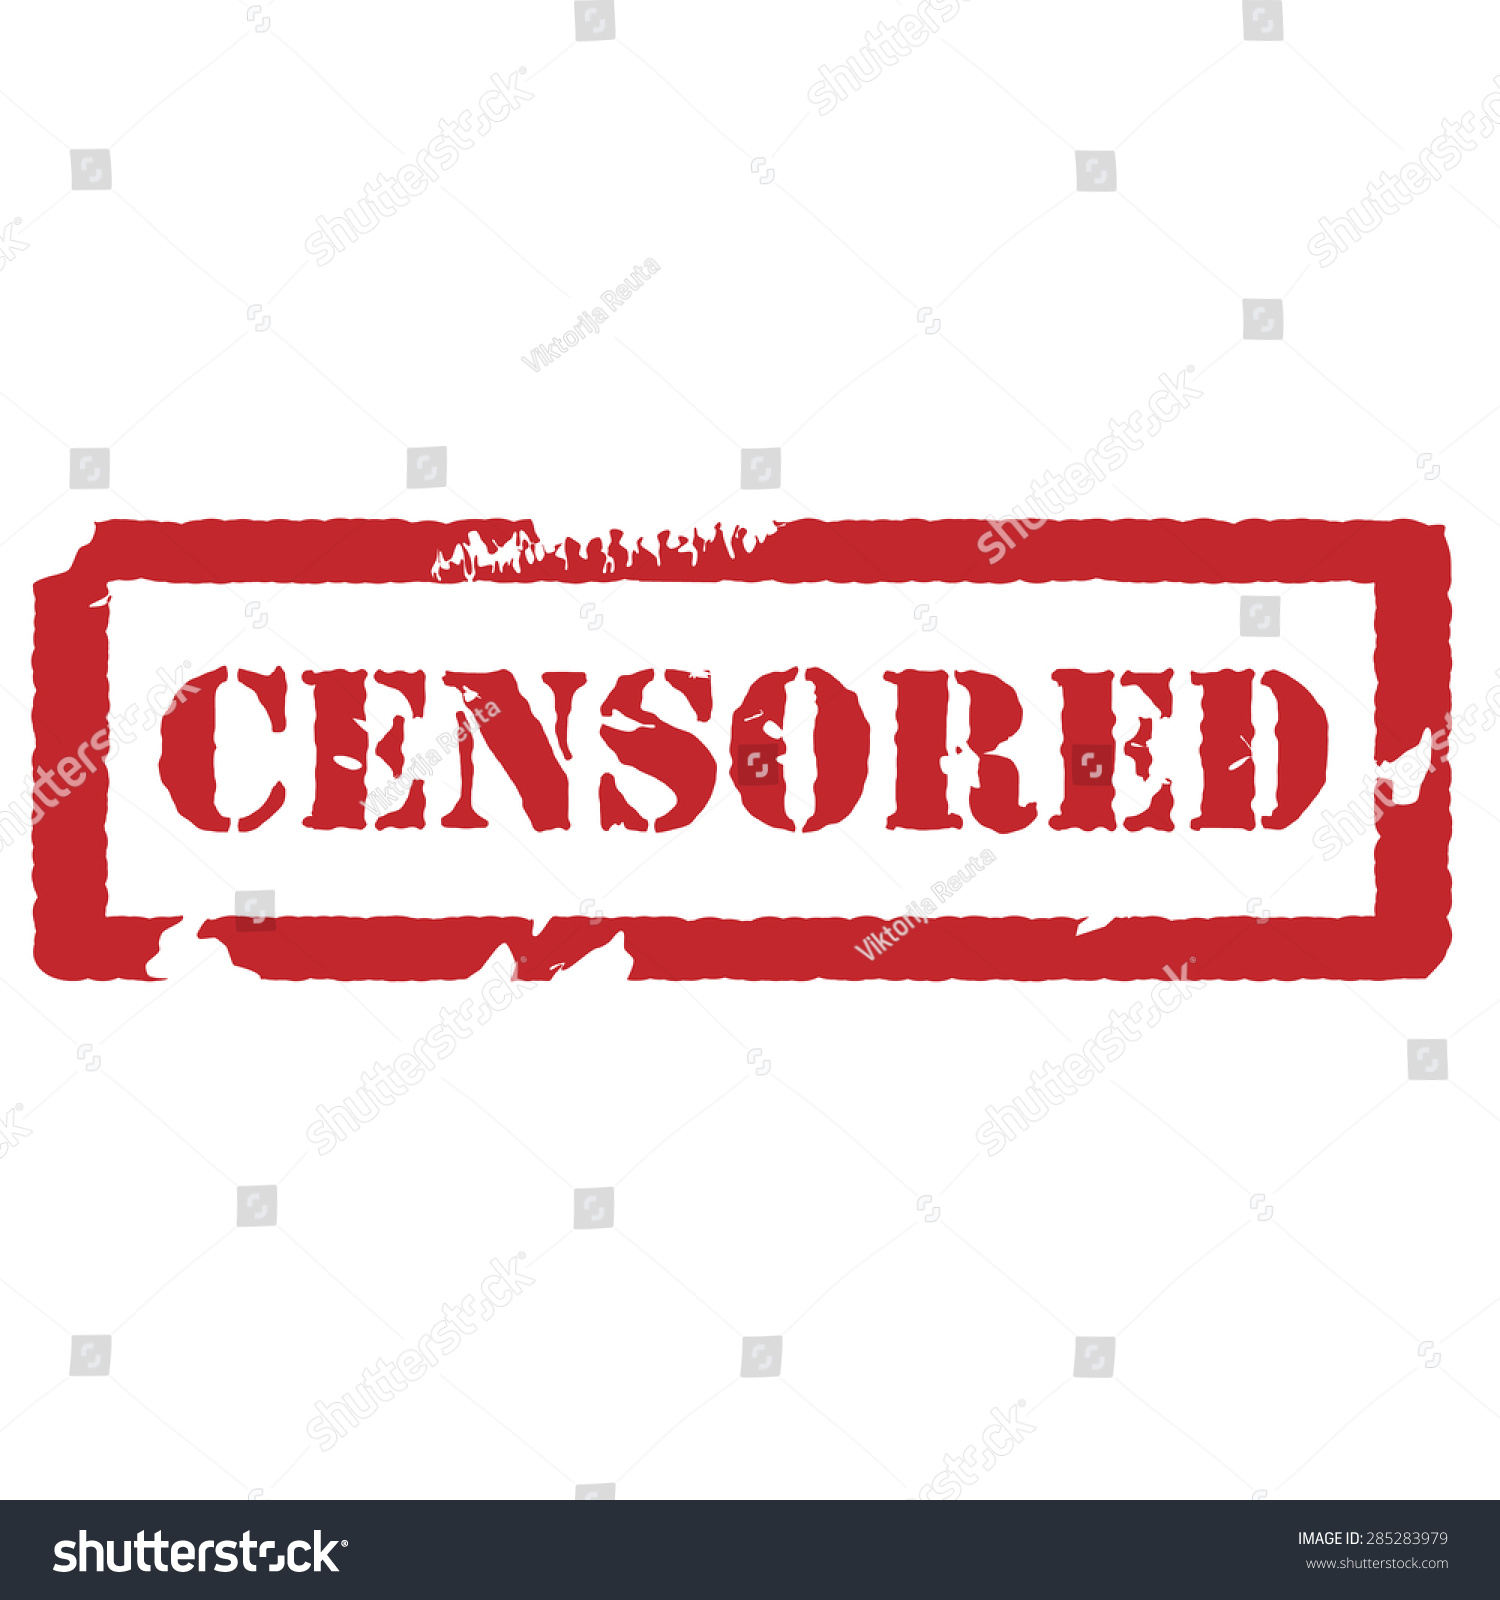  censored